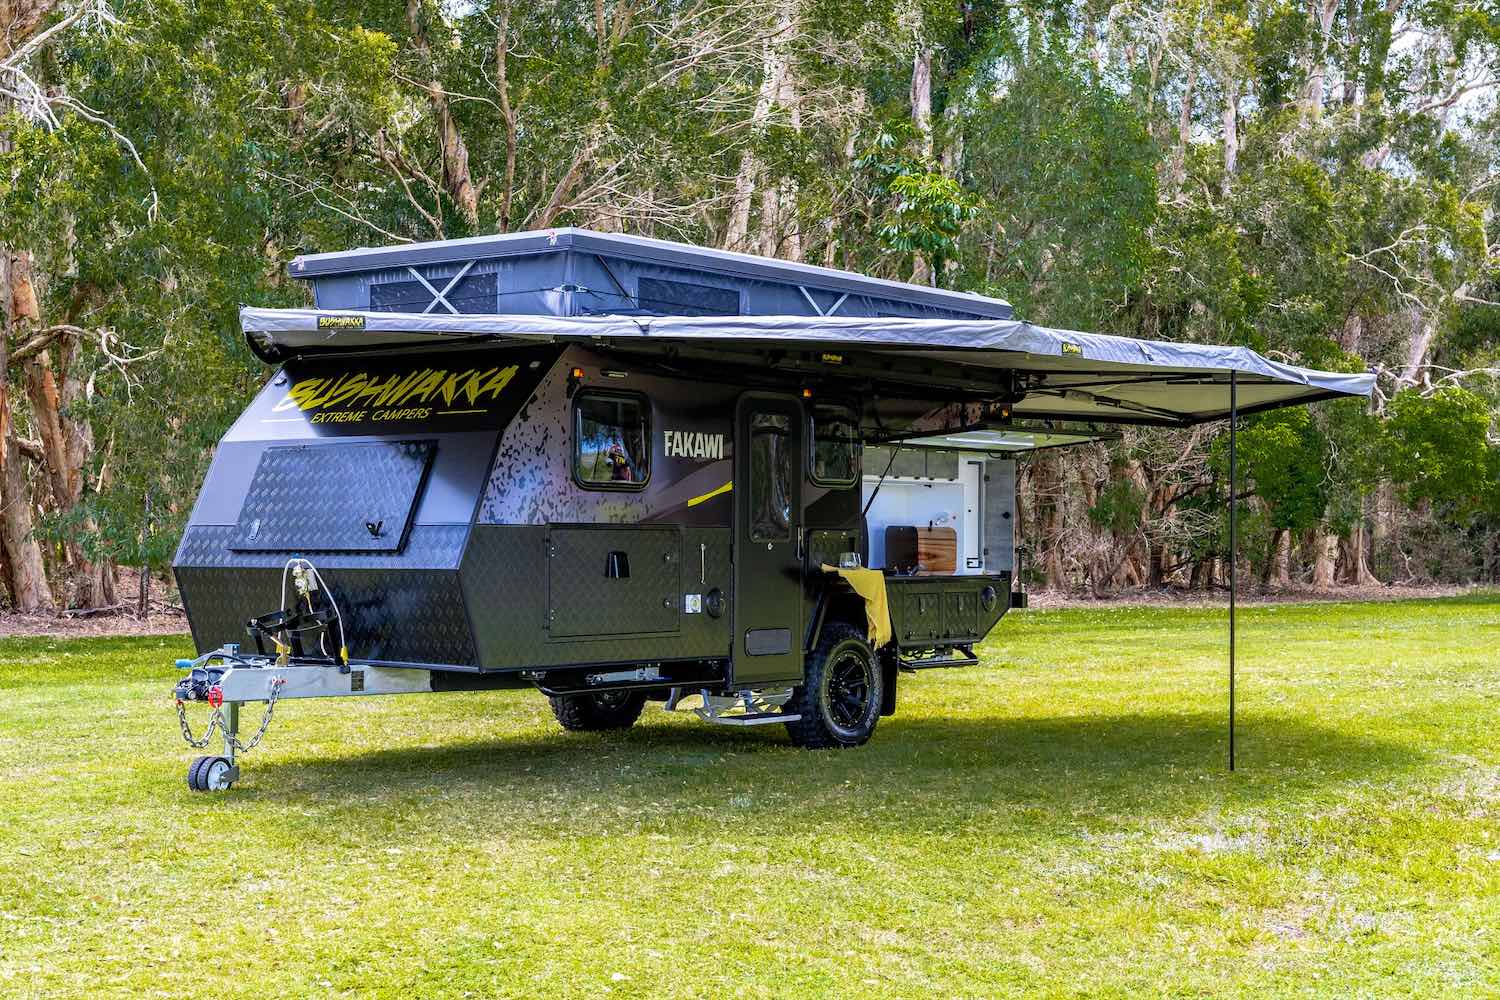 Introducing the Fawaki Hybrid Camper